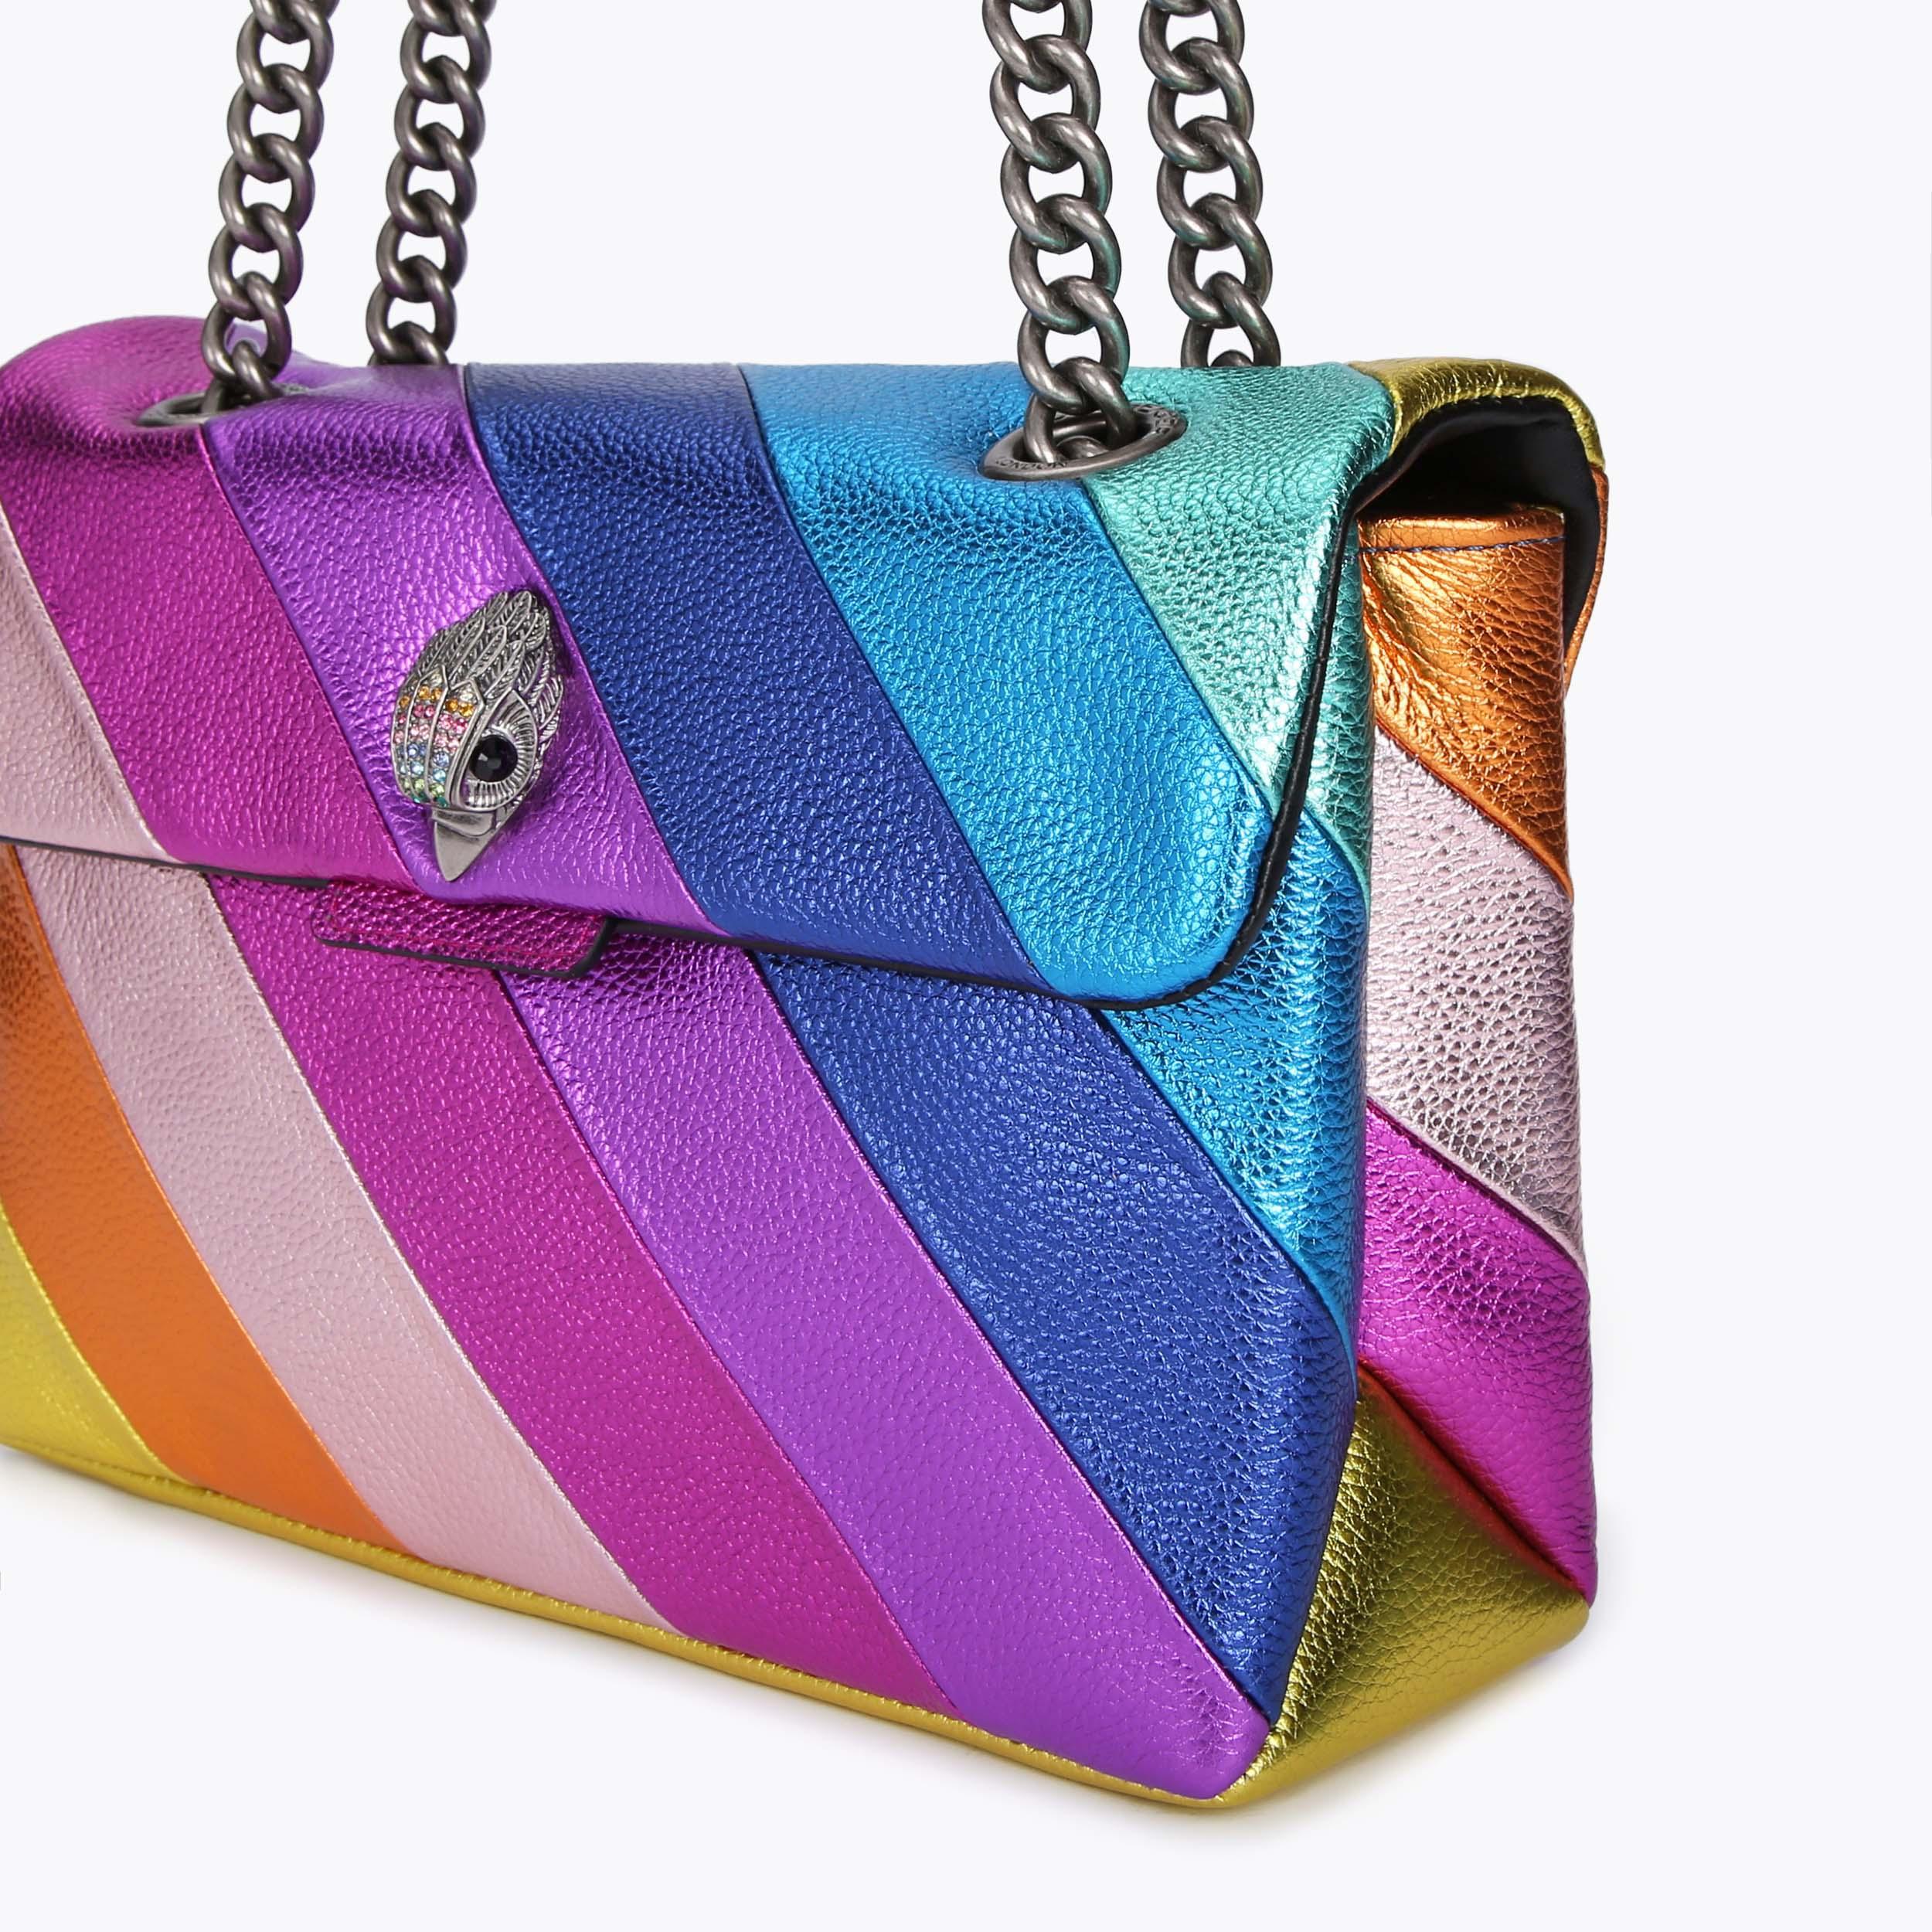 LEATHER KENSINGTON BAG Leather Rainbow Metallic Shoulder Bag by KURT ...